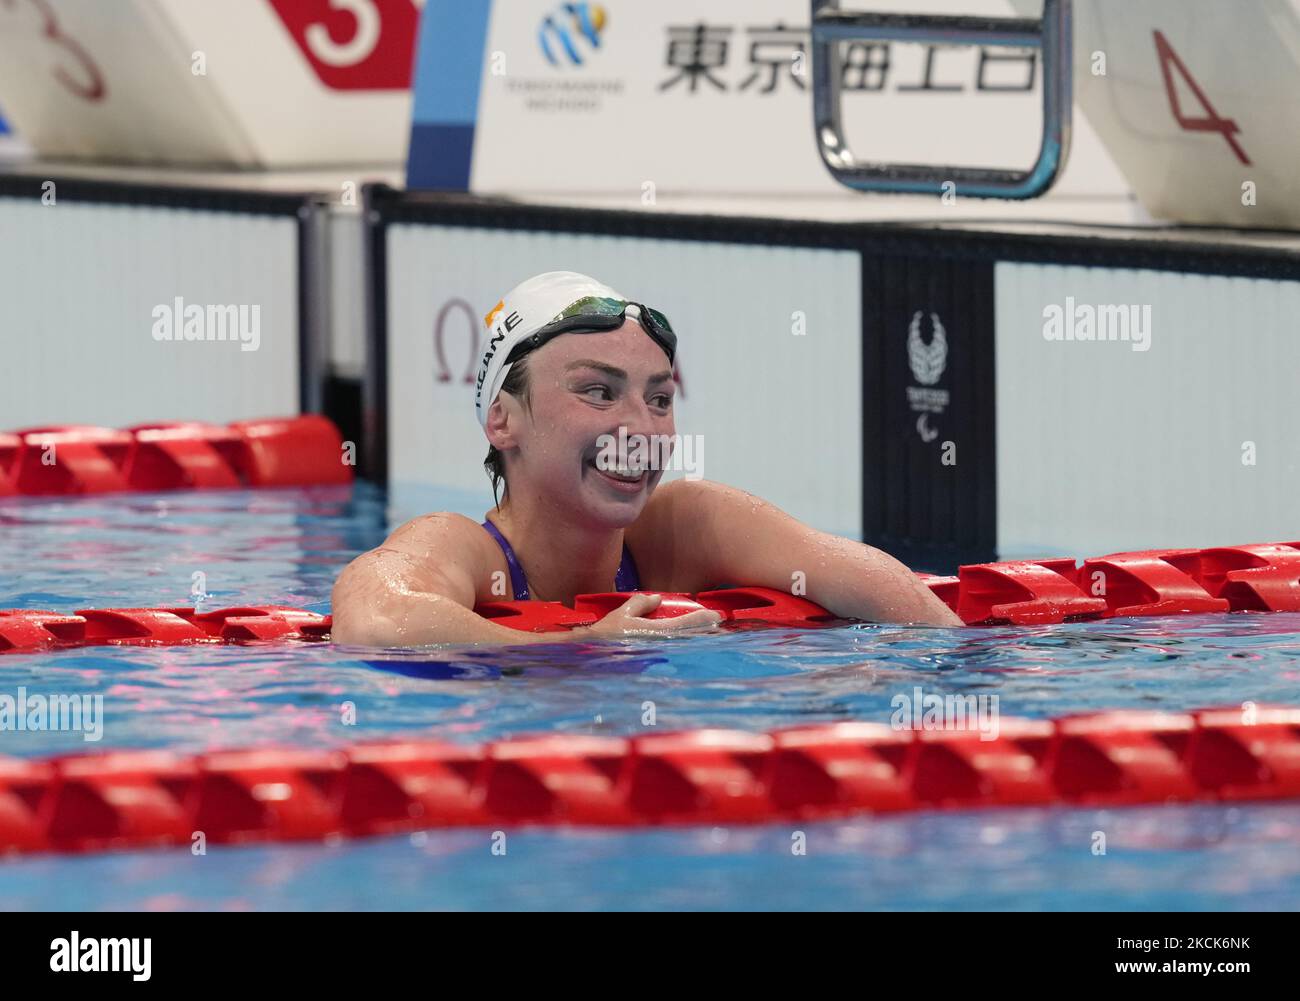 Ellen Keane from Ireland winning gold during swimming at the Tokyo Paraolympics, Tokyo aquatic centre, Tokyo, Japan on August 26, 2021. (Photo by Ulrik Pedersen/NurPhoto) Stock Photo